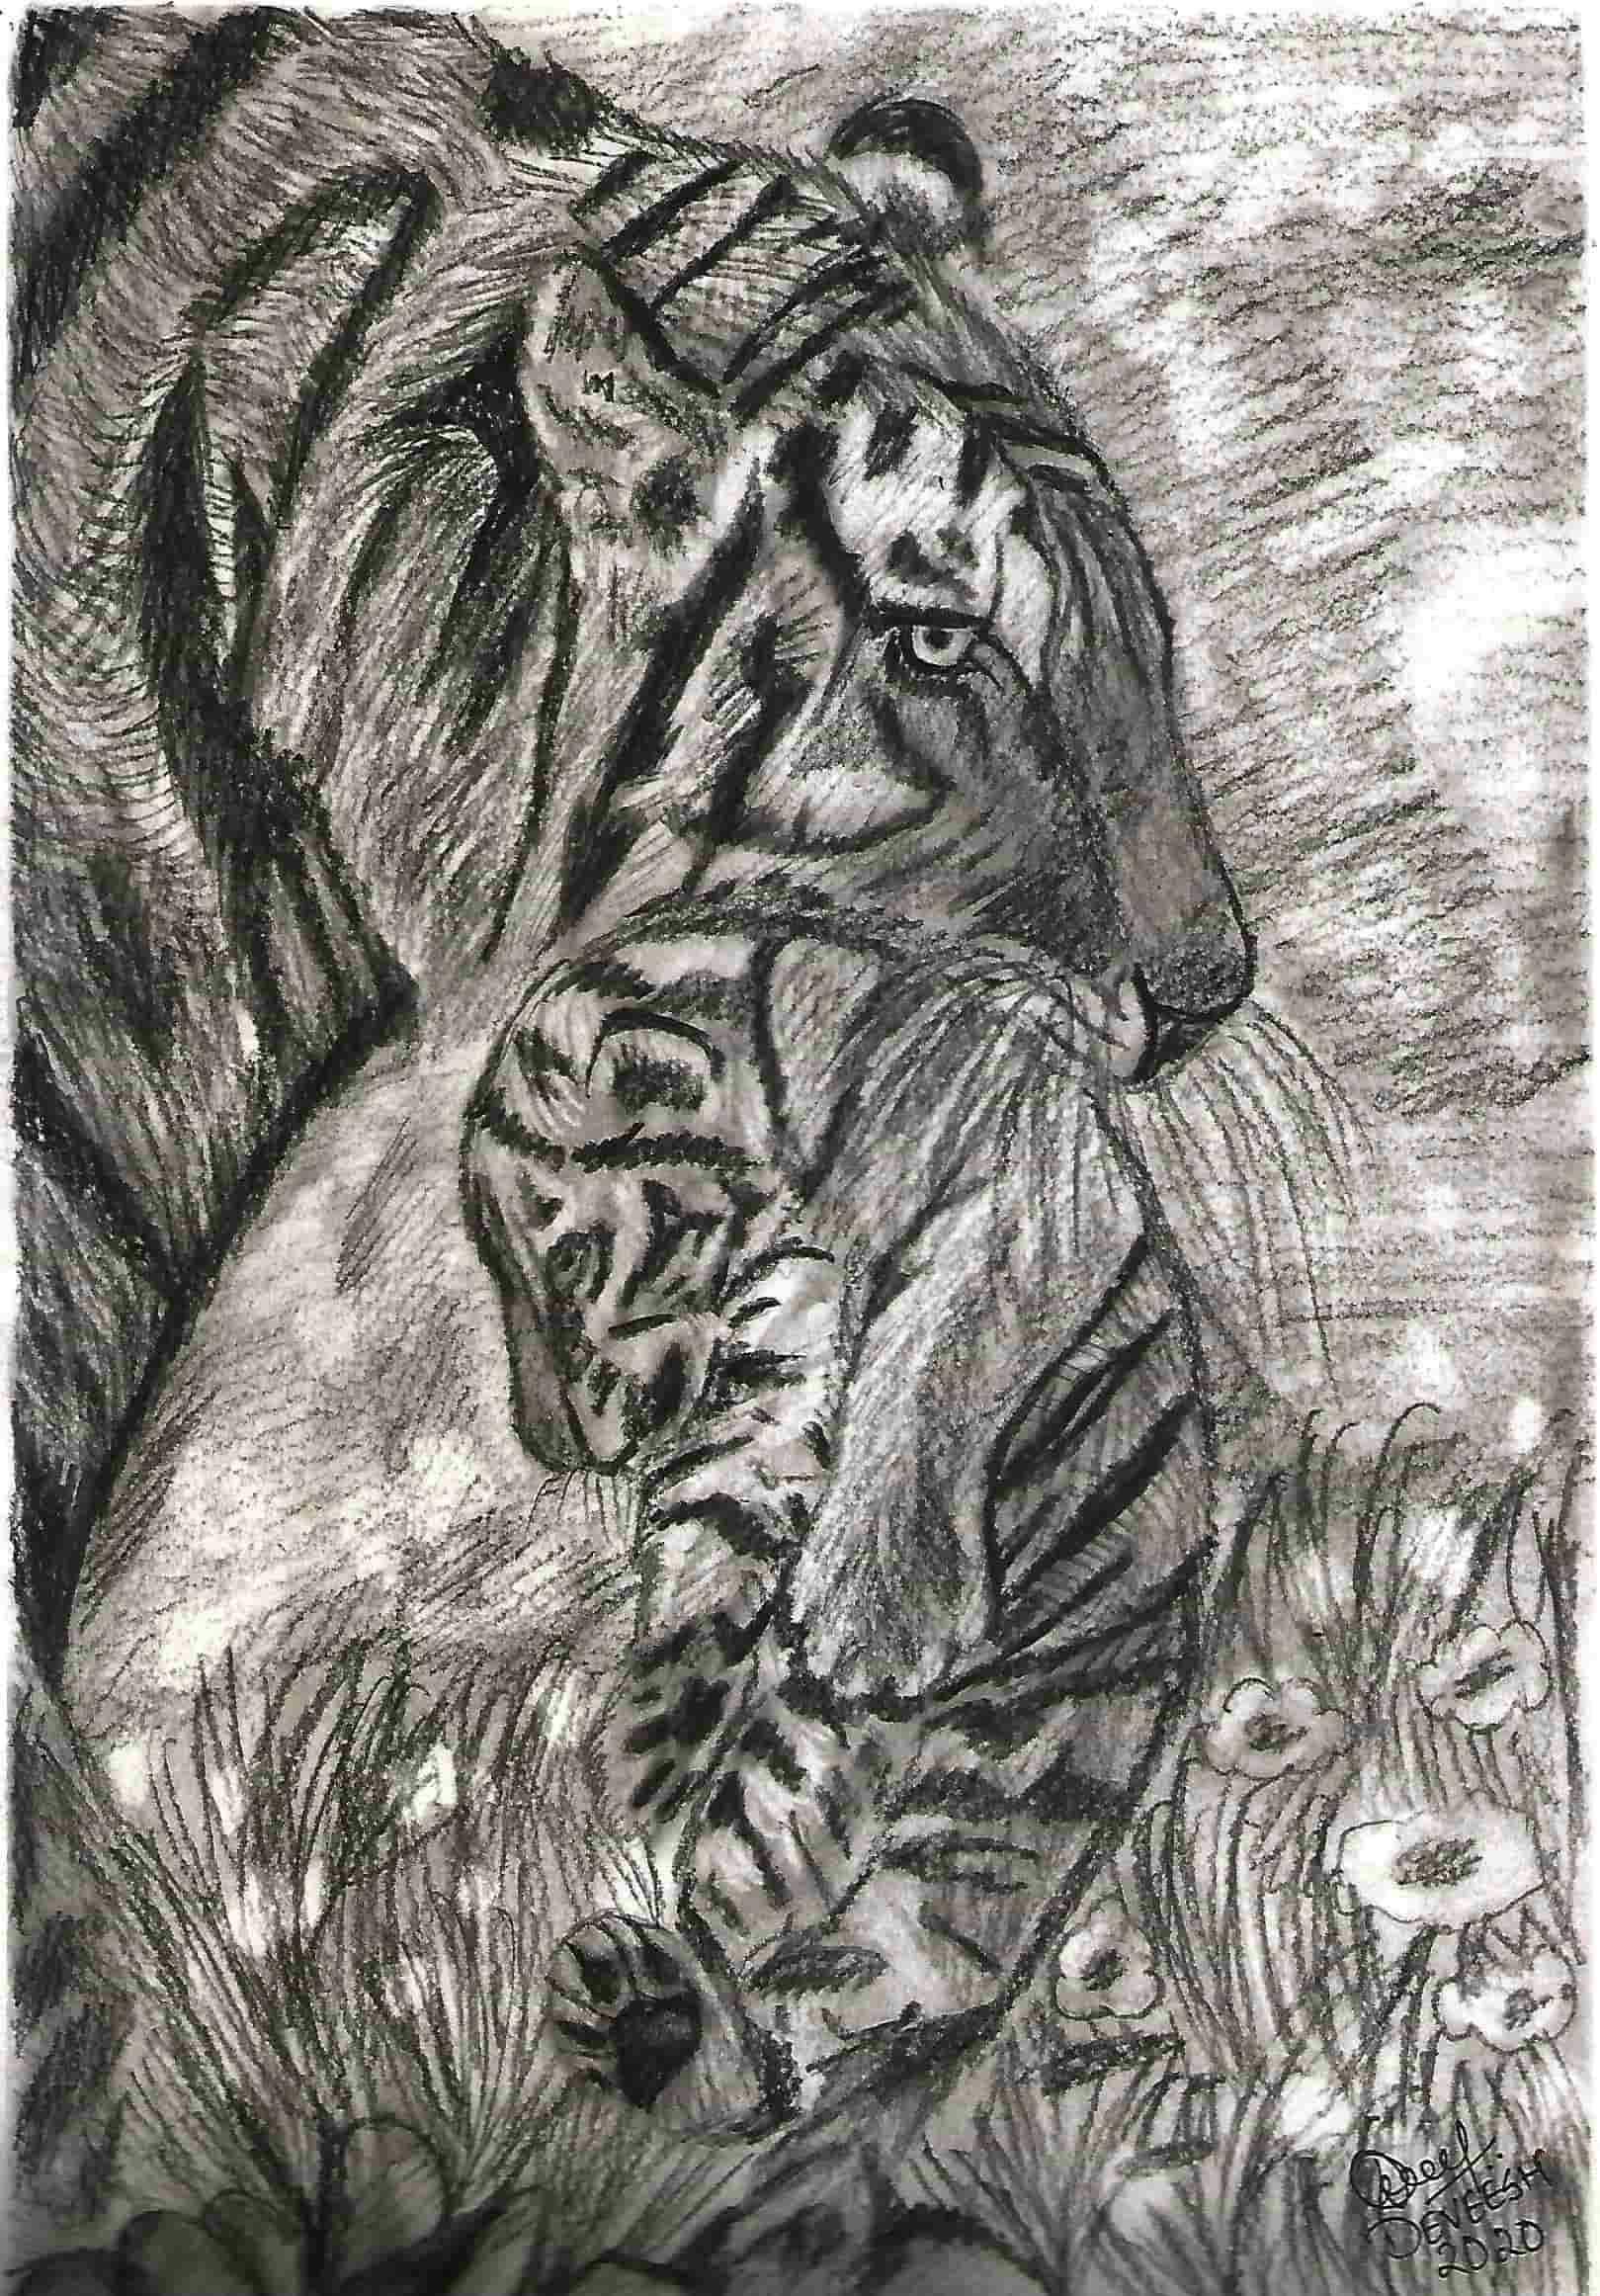 Pencil Sketch of Tiger holding his Cub